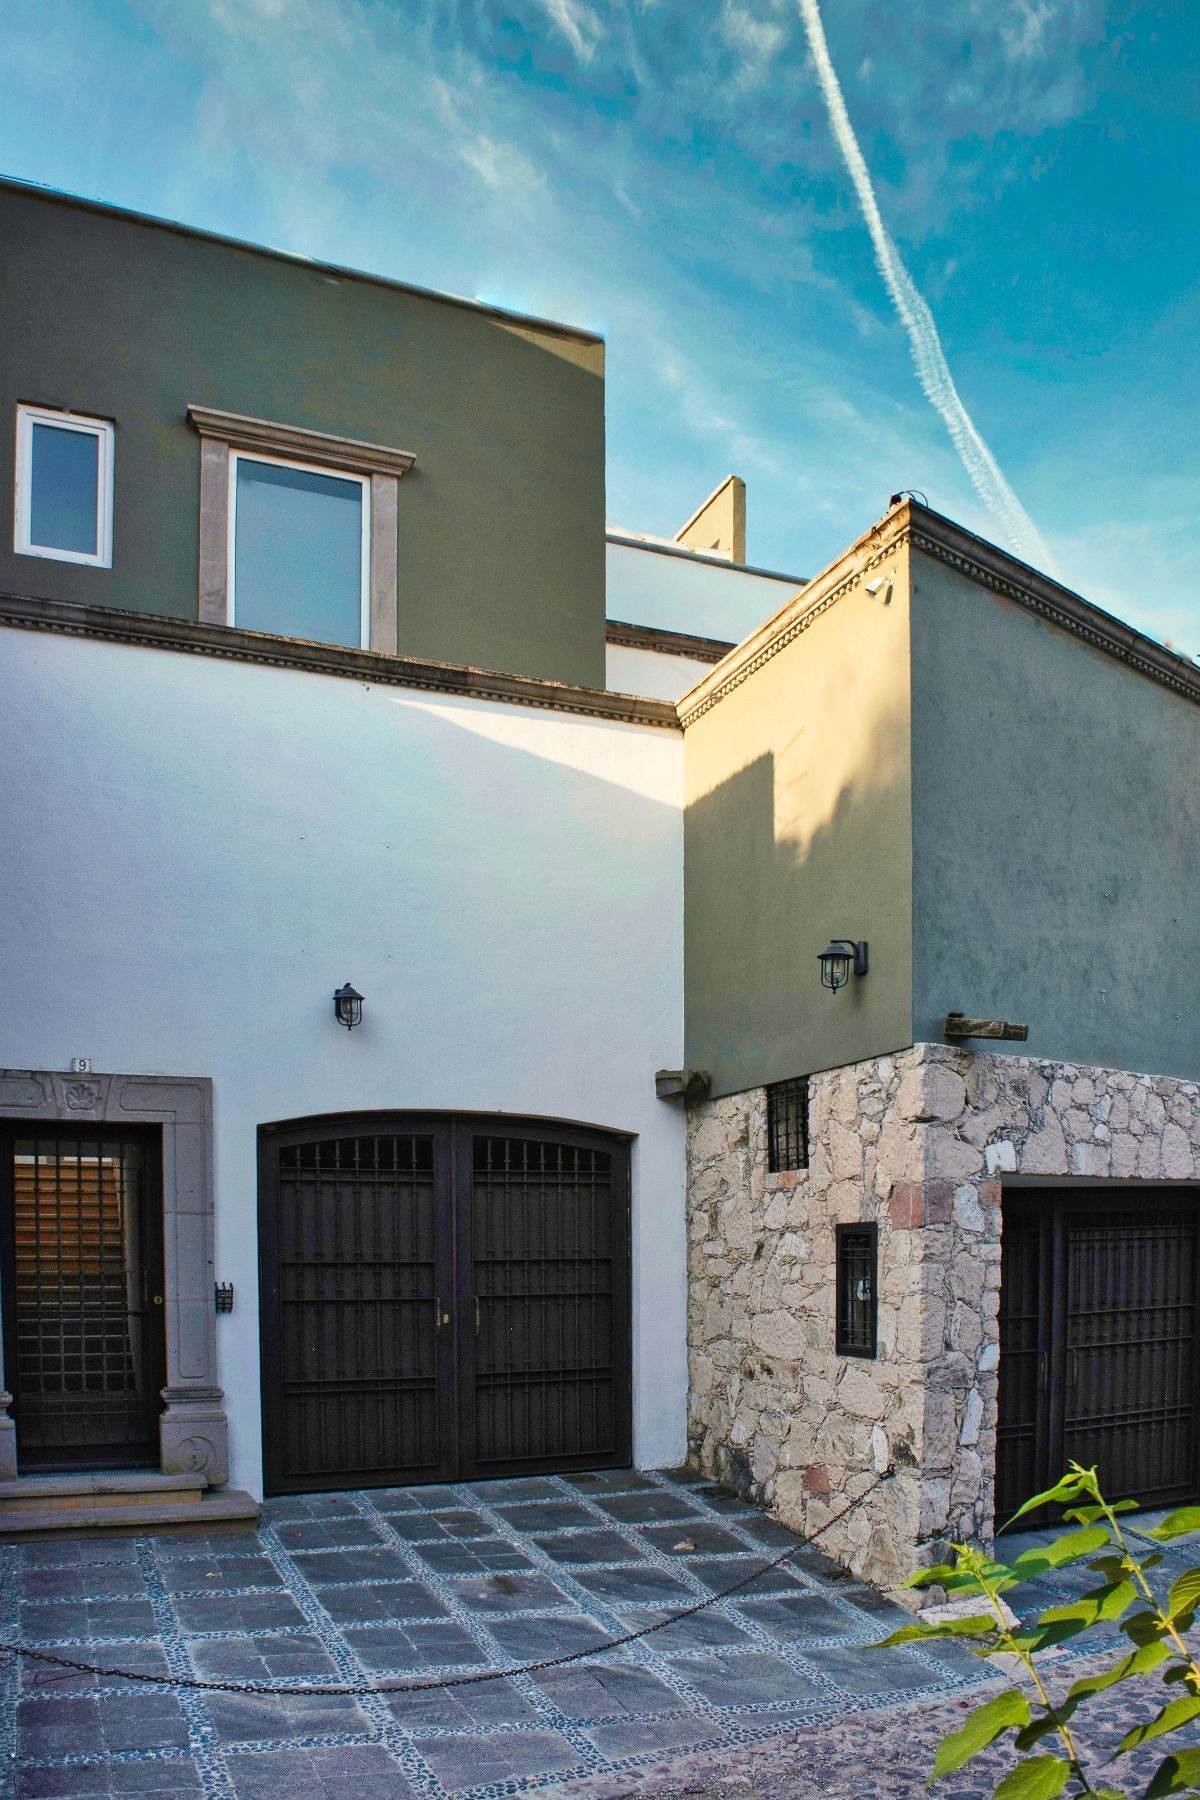 Property for Sale at Casa Alba Camino Real a Xichu #9, Guadiana San Miguel De Allende, Guanajuato 37770 Mexico